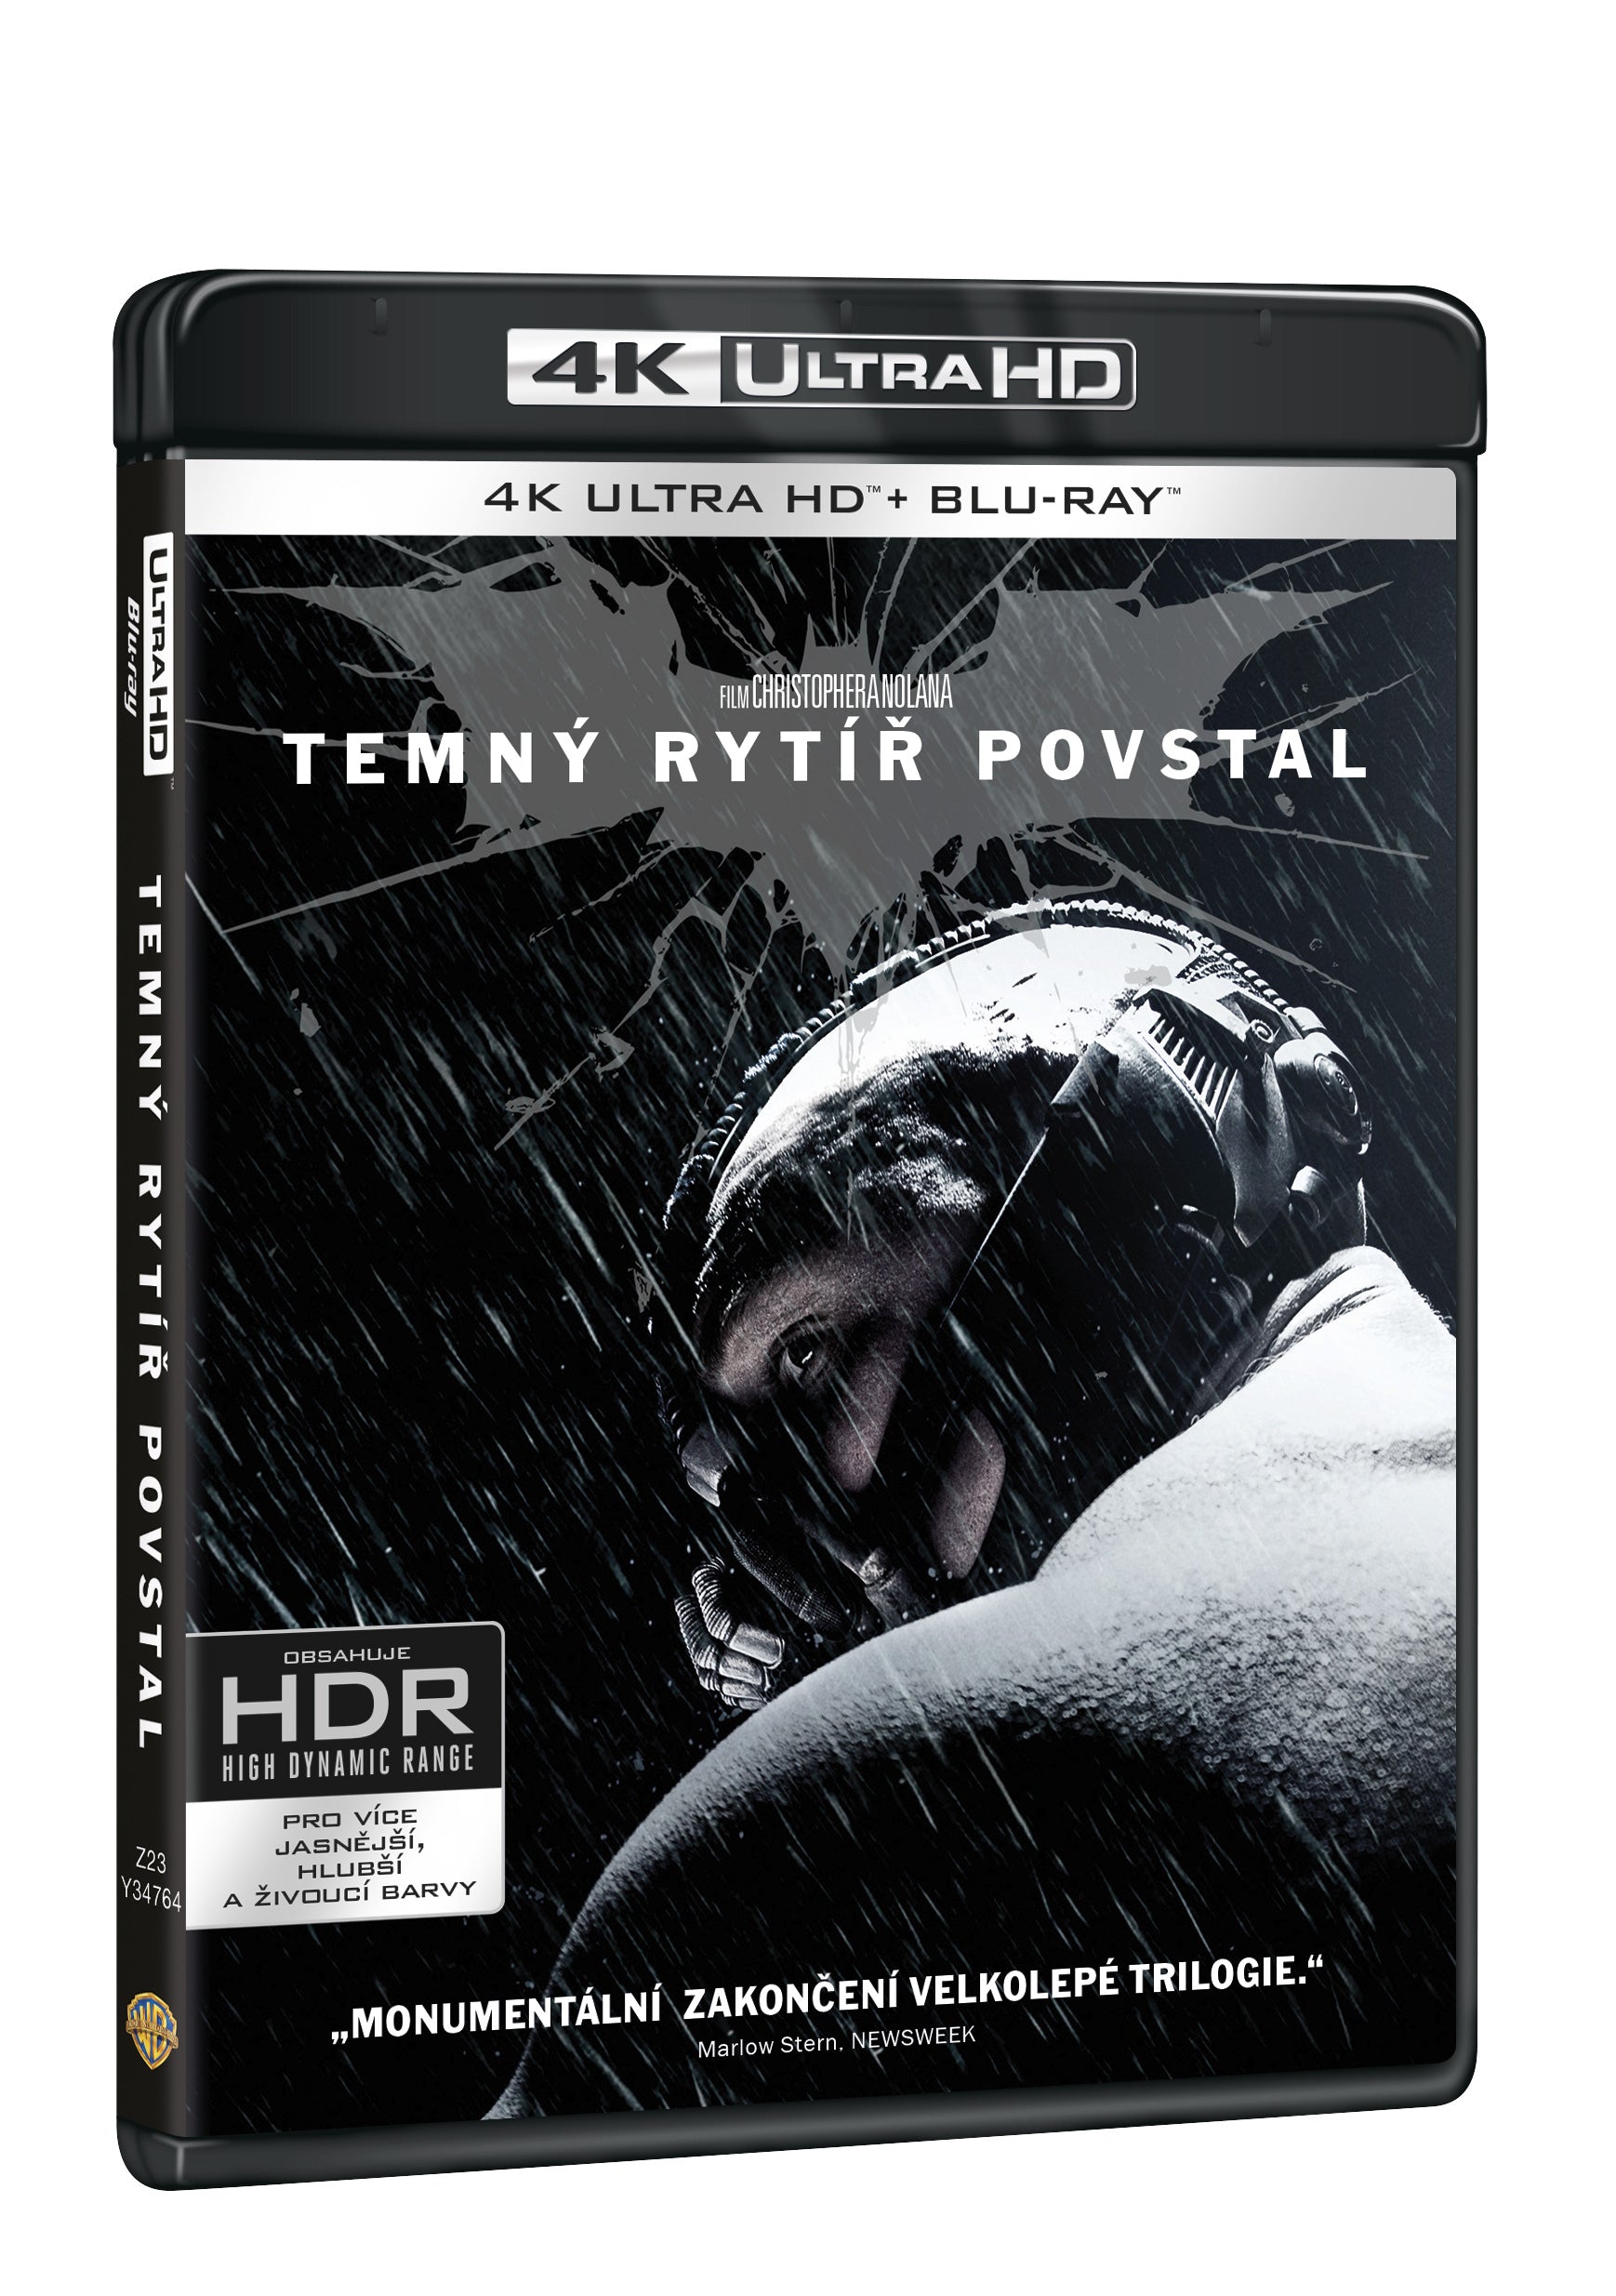 Temny rytir povstal 3BD (UHD+BD+bonus disk) / Dark Knight Rises - Czech version